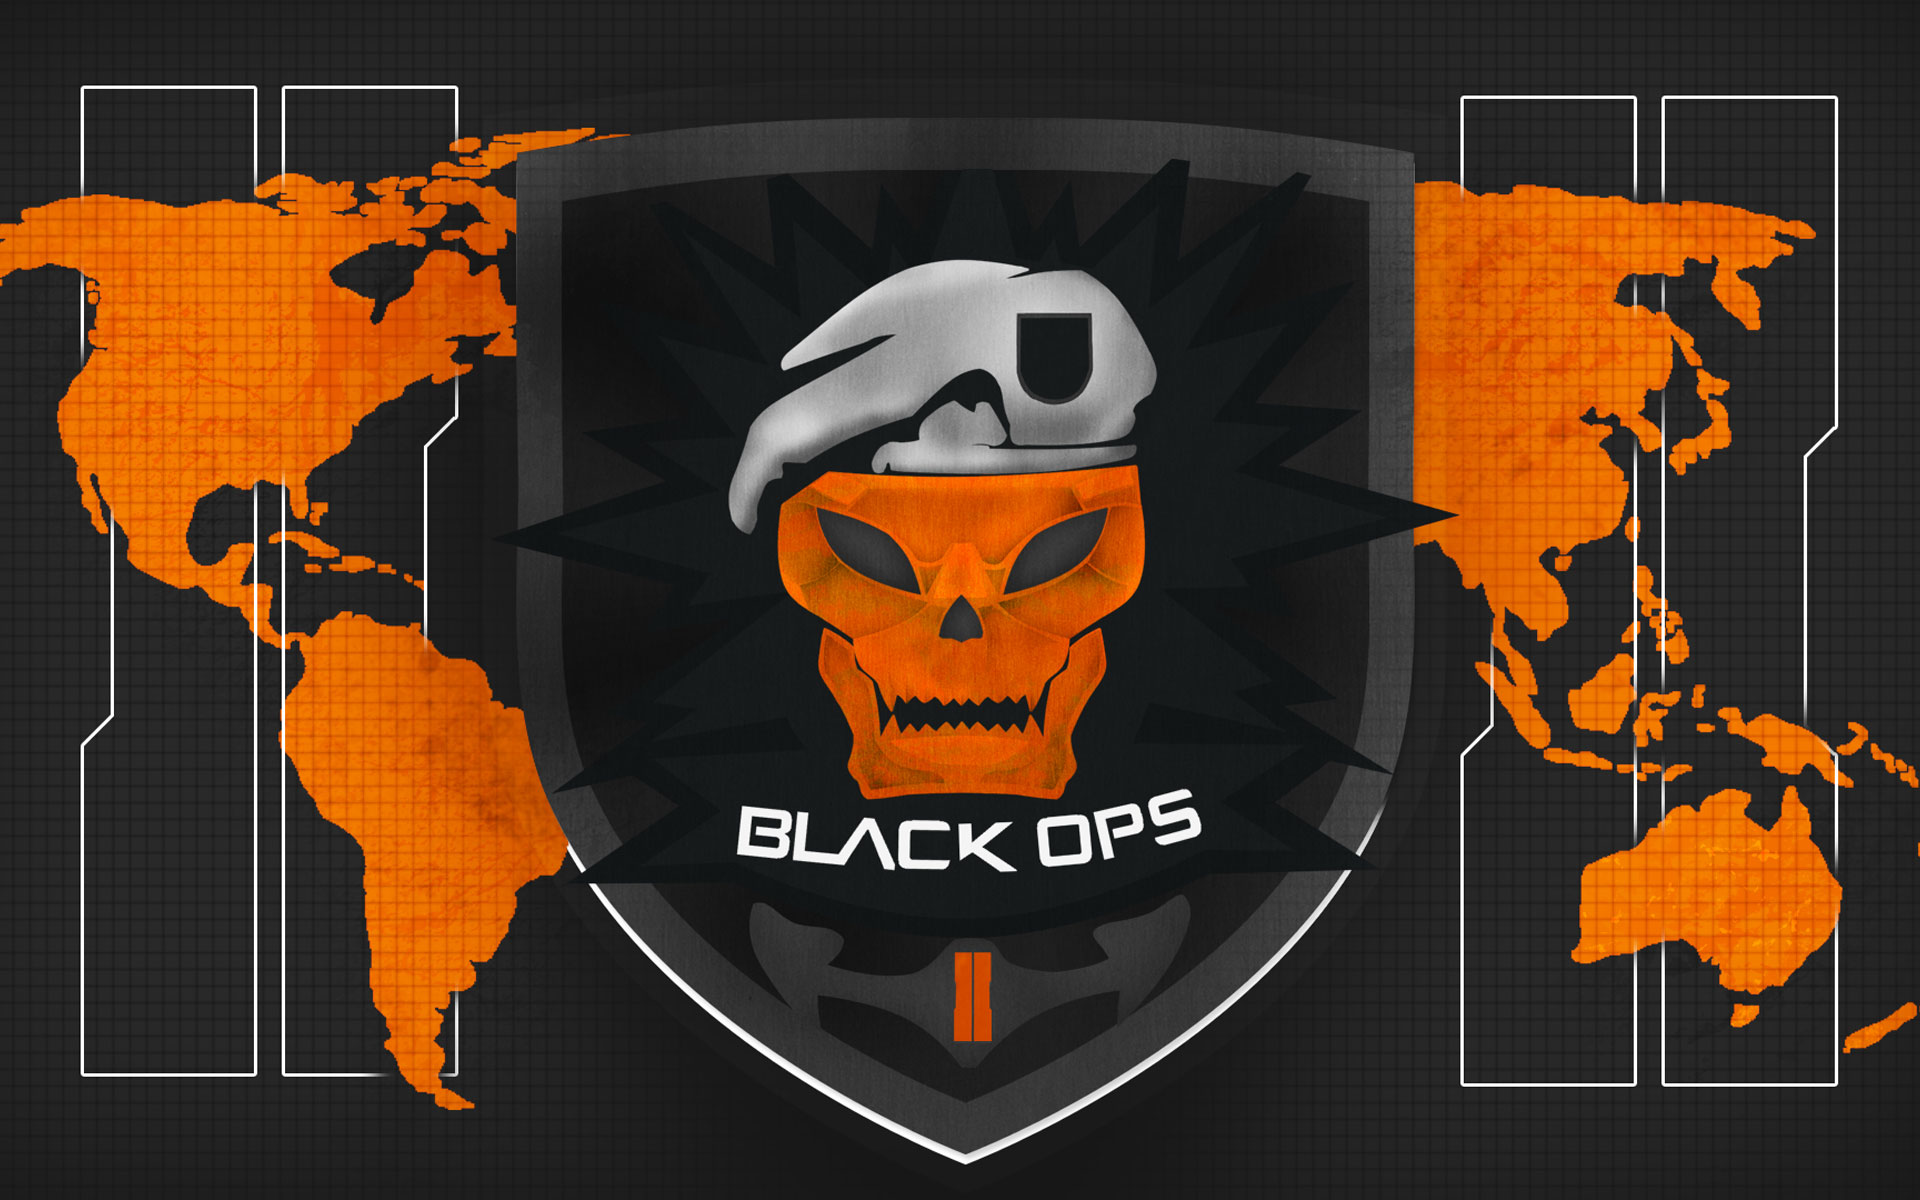 Black Ops Wallpaper for Download